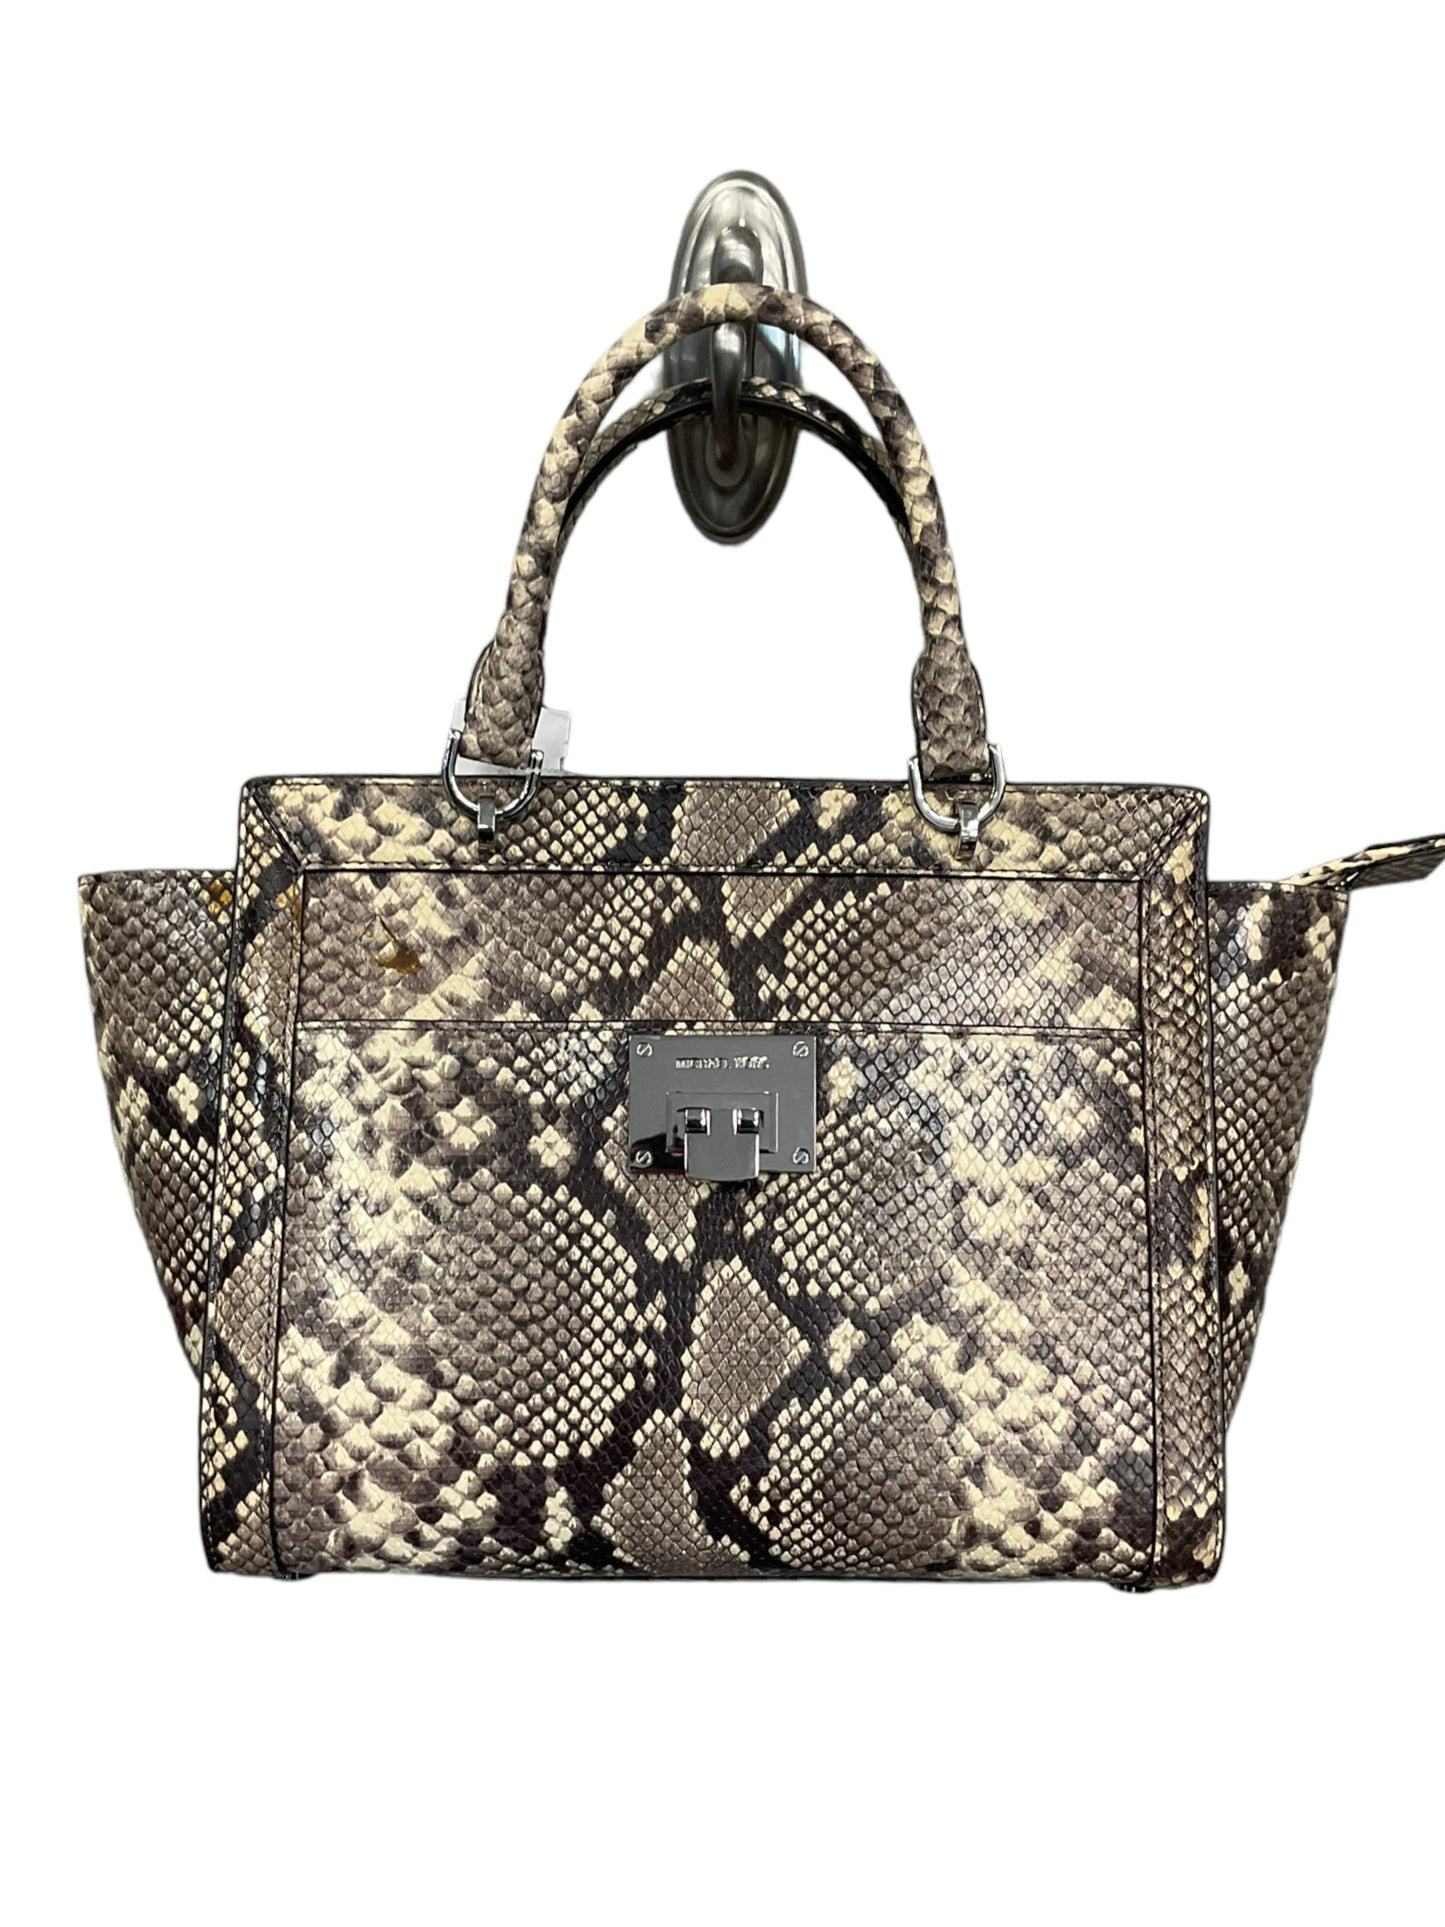 Snakeskin Print Handbag Designer Michael Kors, Size Medium